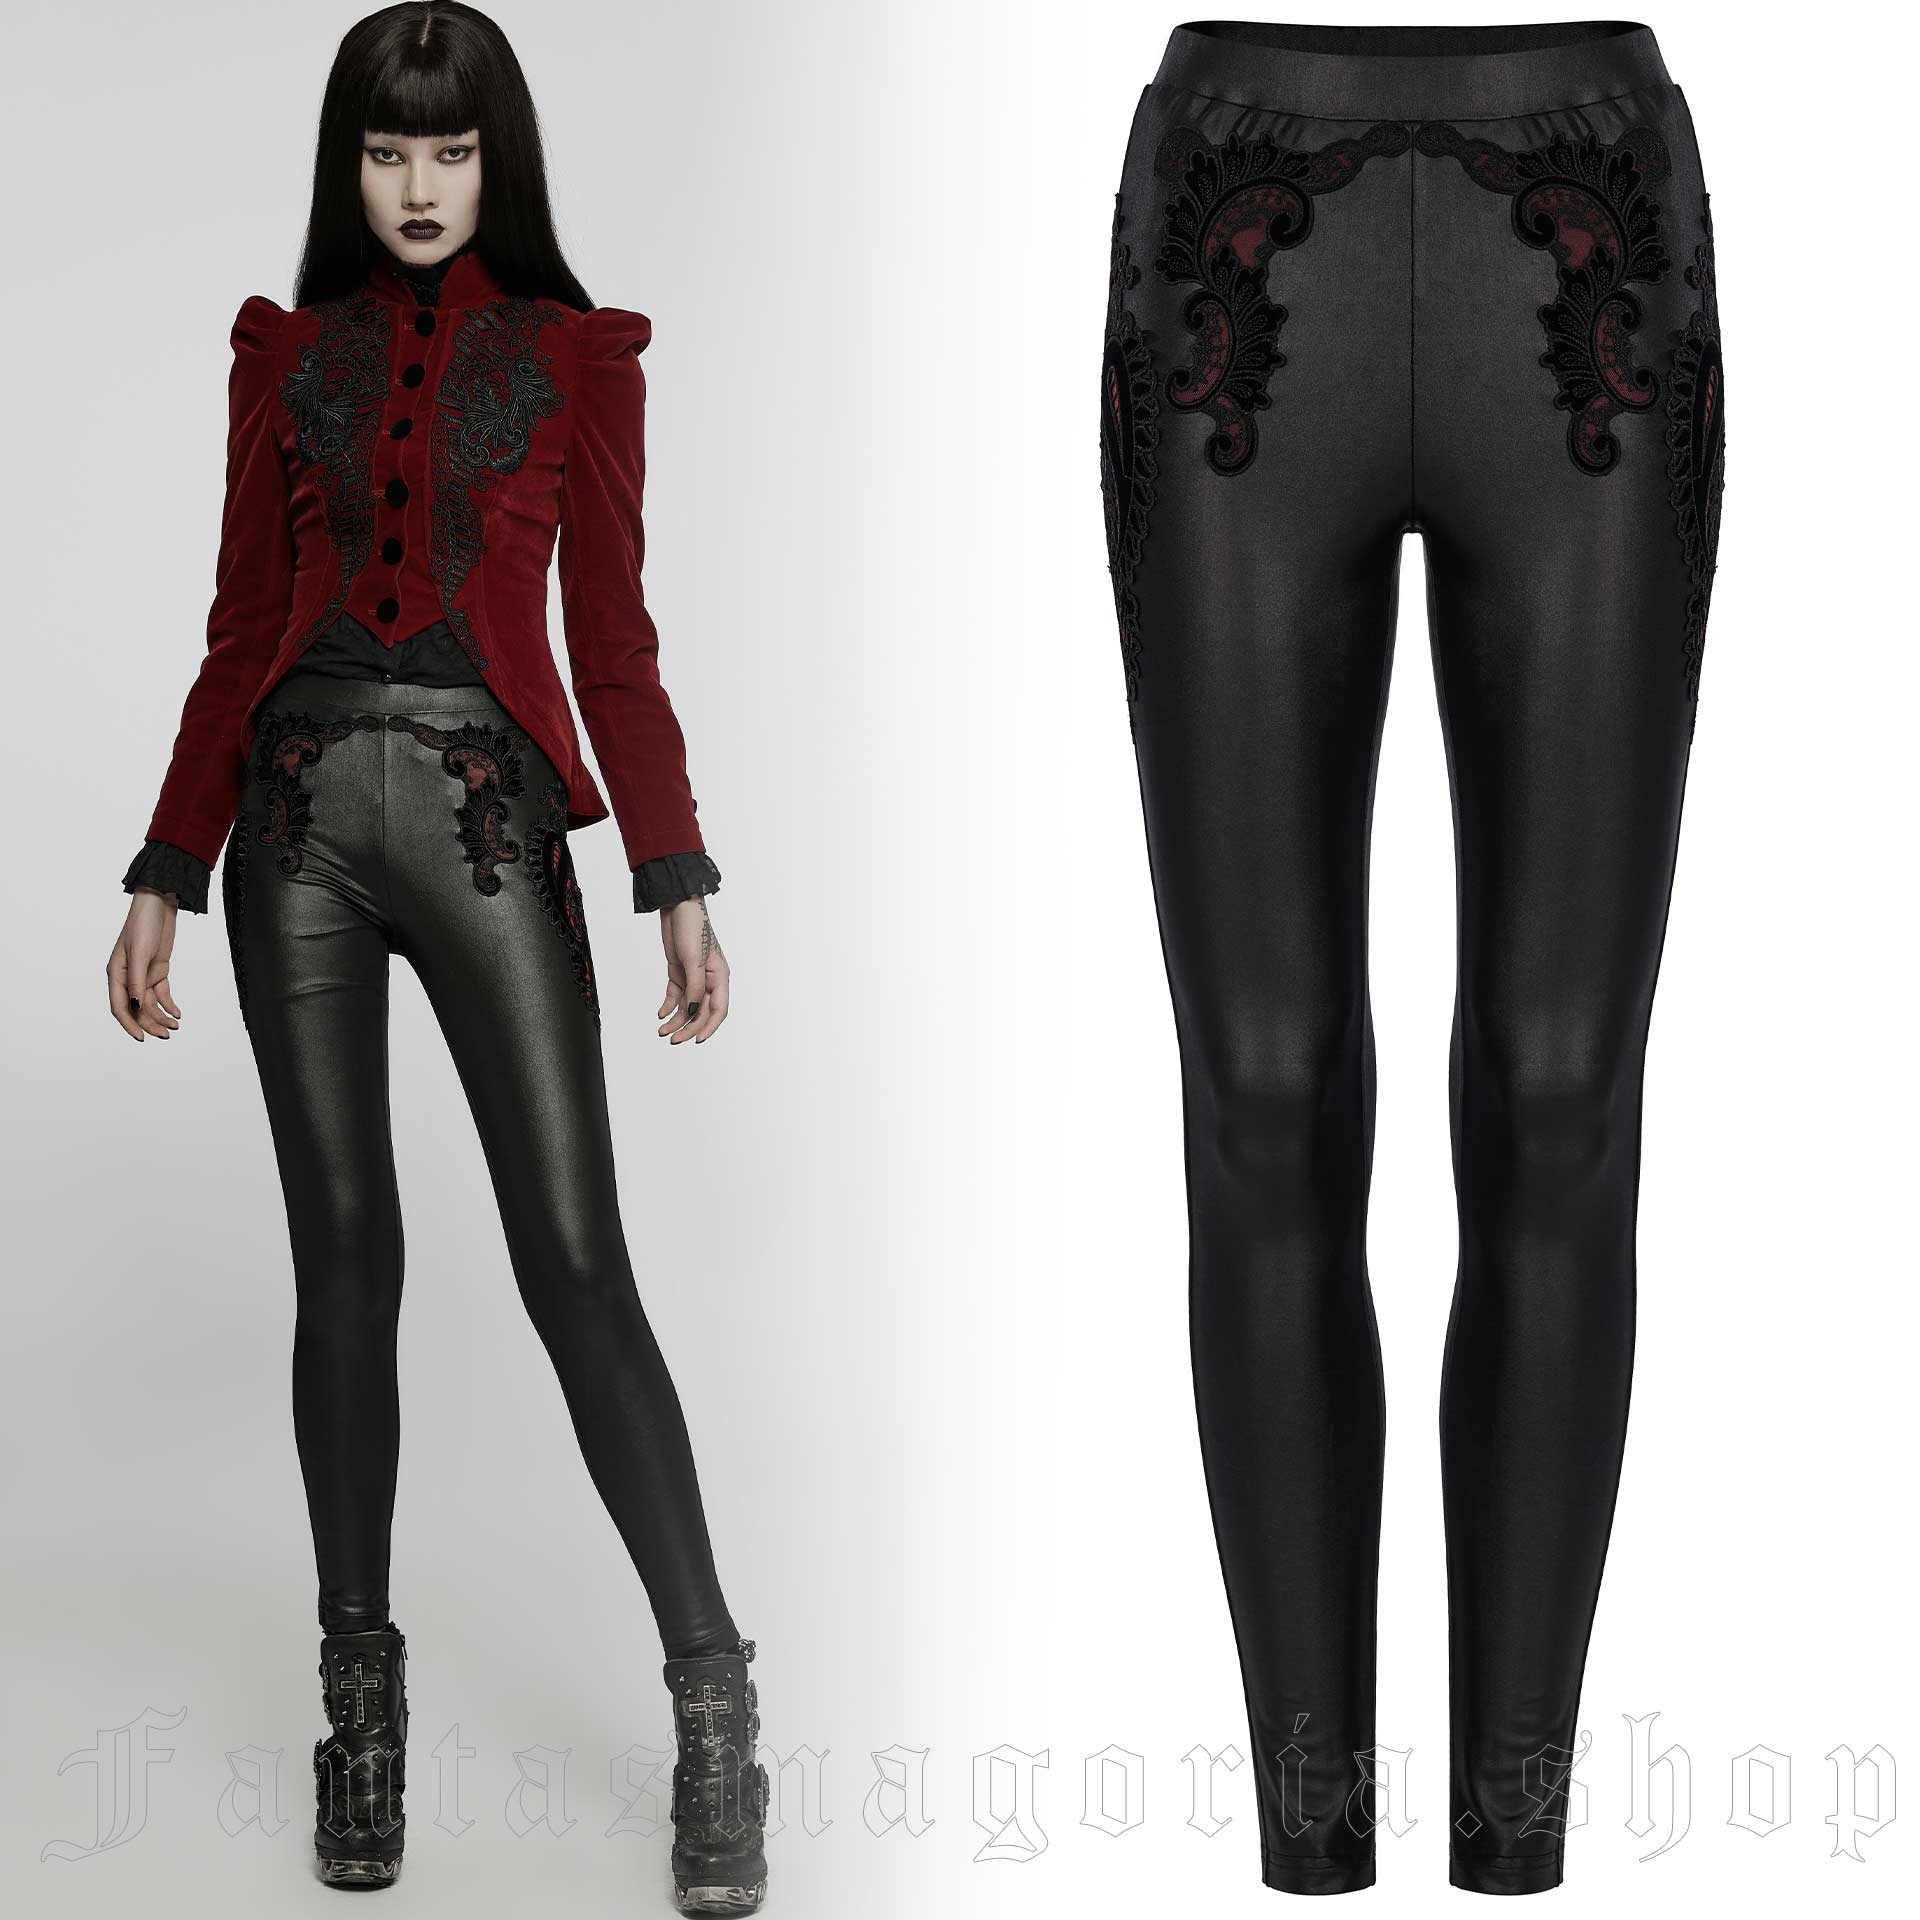 WK-516 Womens Gothic Lace Applique Leggings - Black & Red